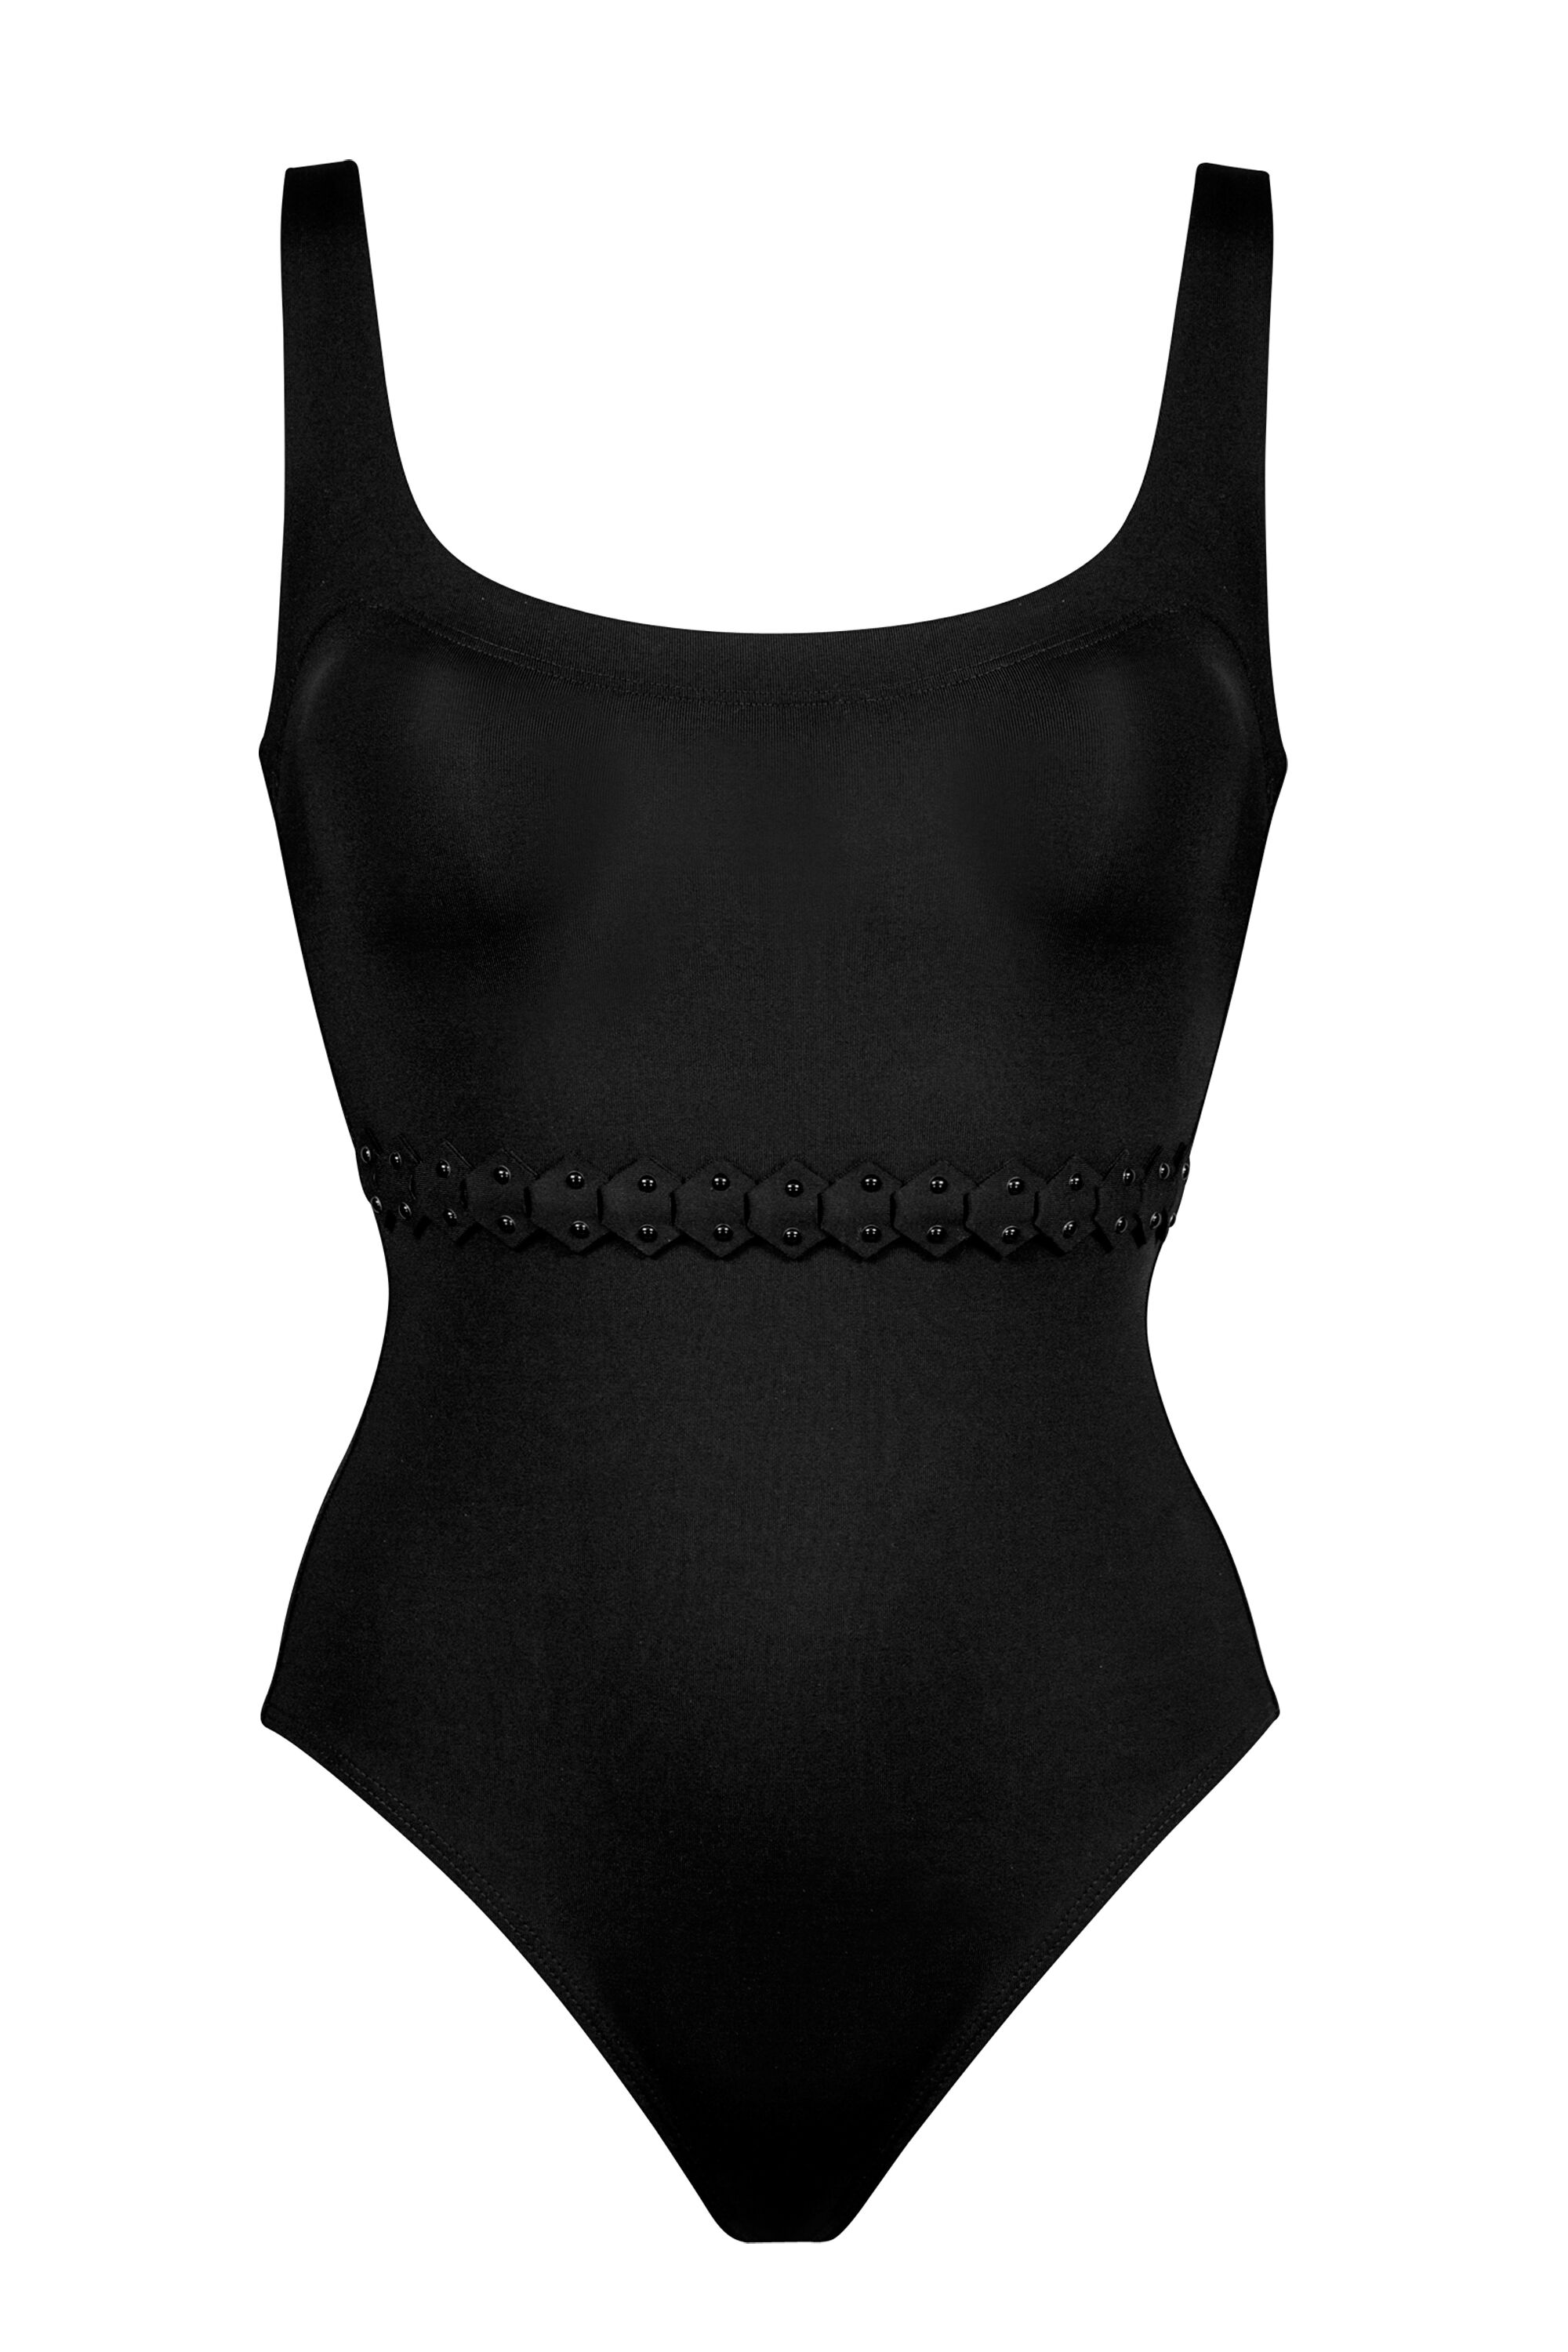 swimsuit - 919 - black | MARYAN MEHLHORN